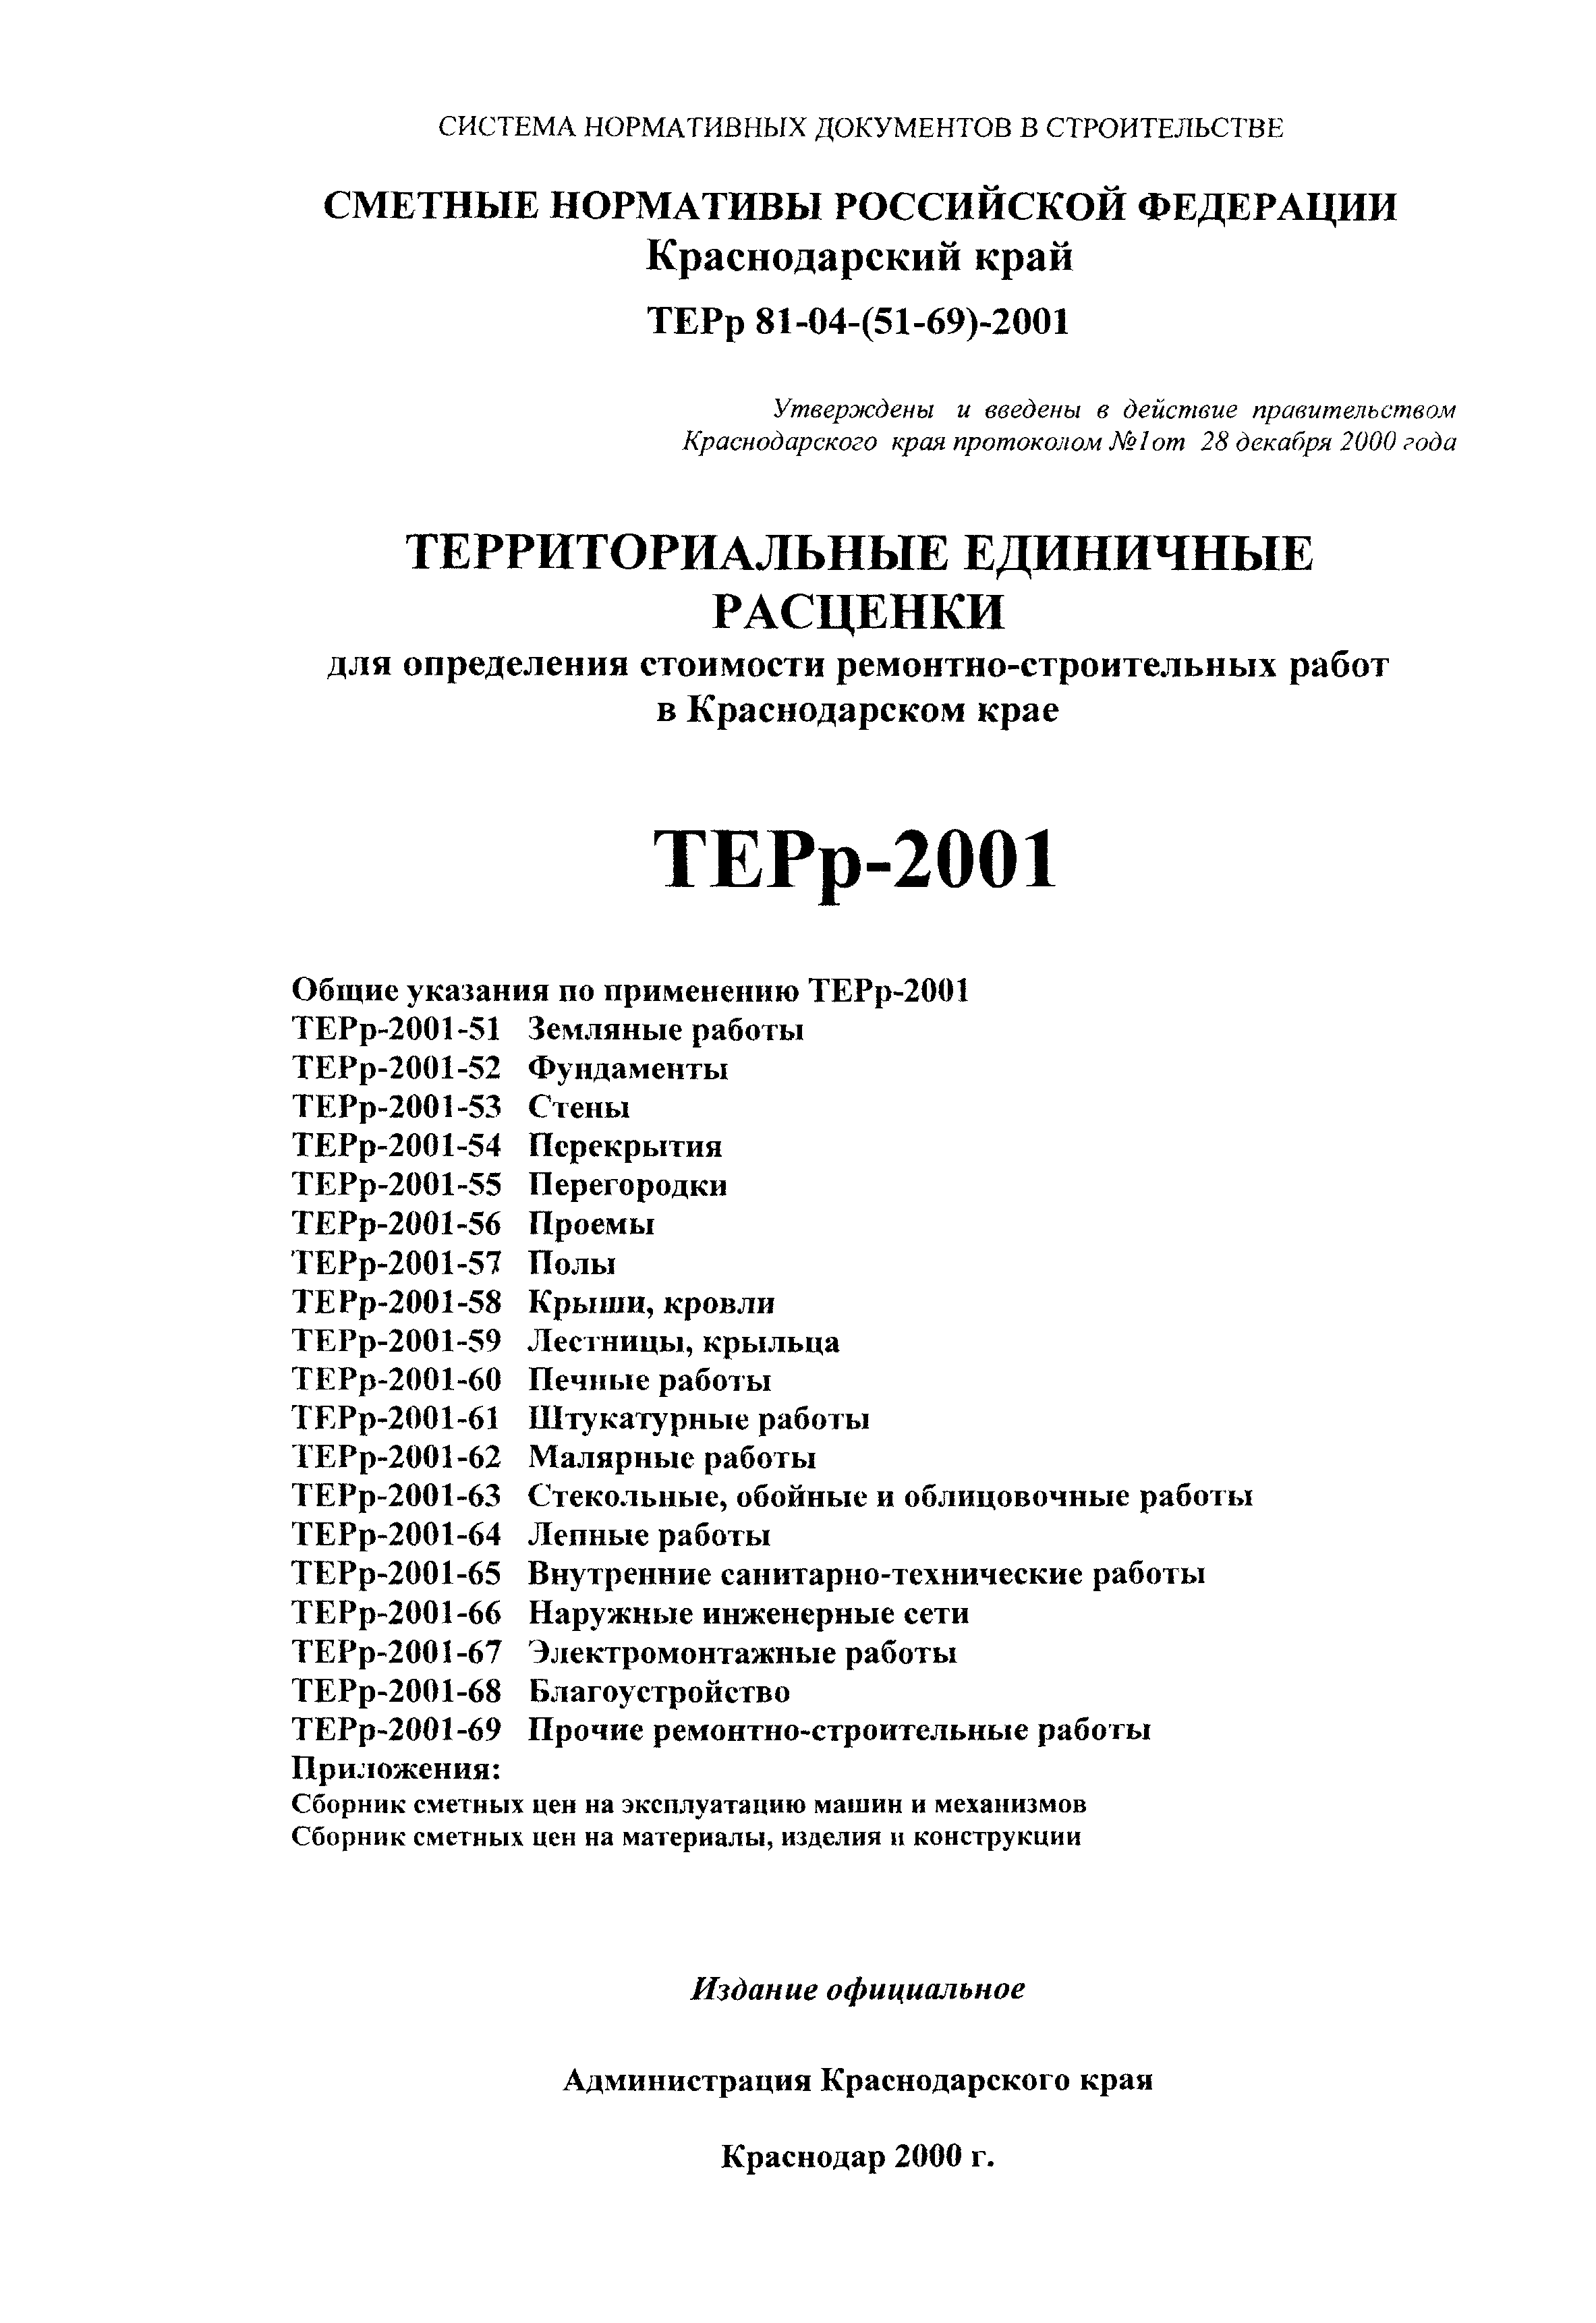 ТЕРр Краснодарский край 2001-51